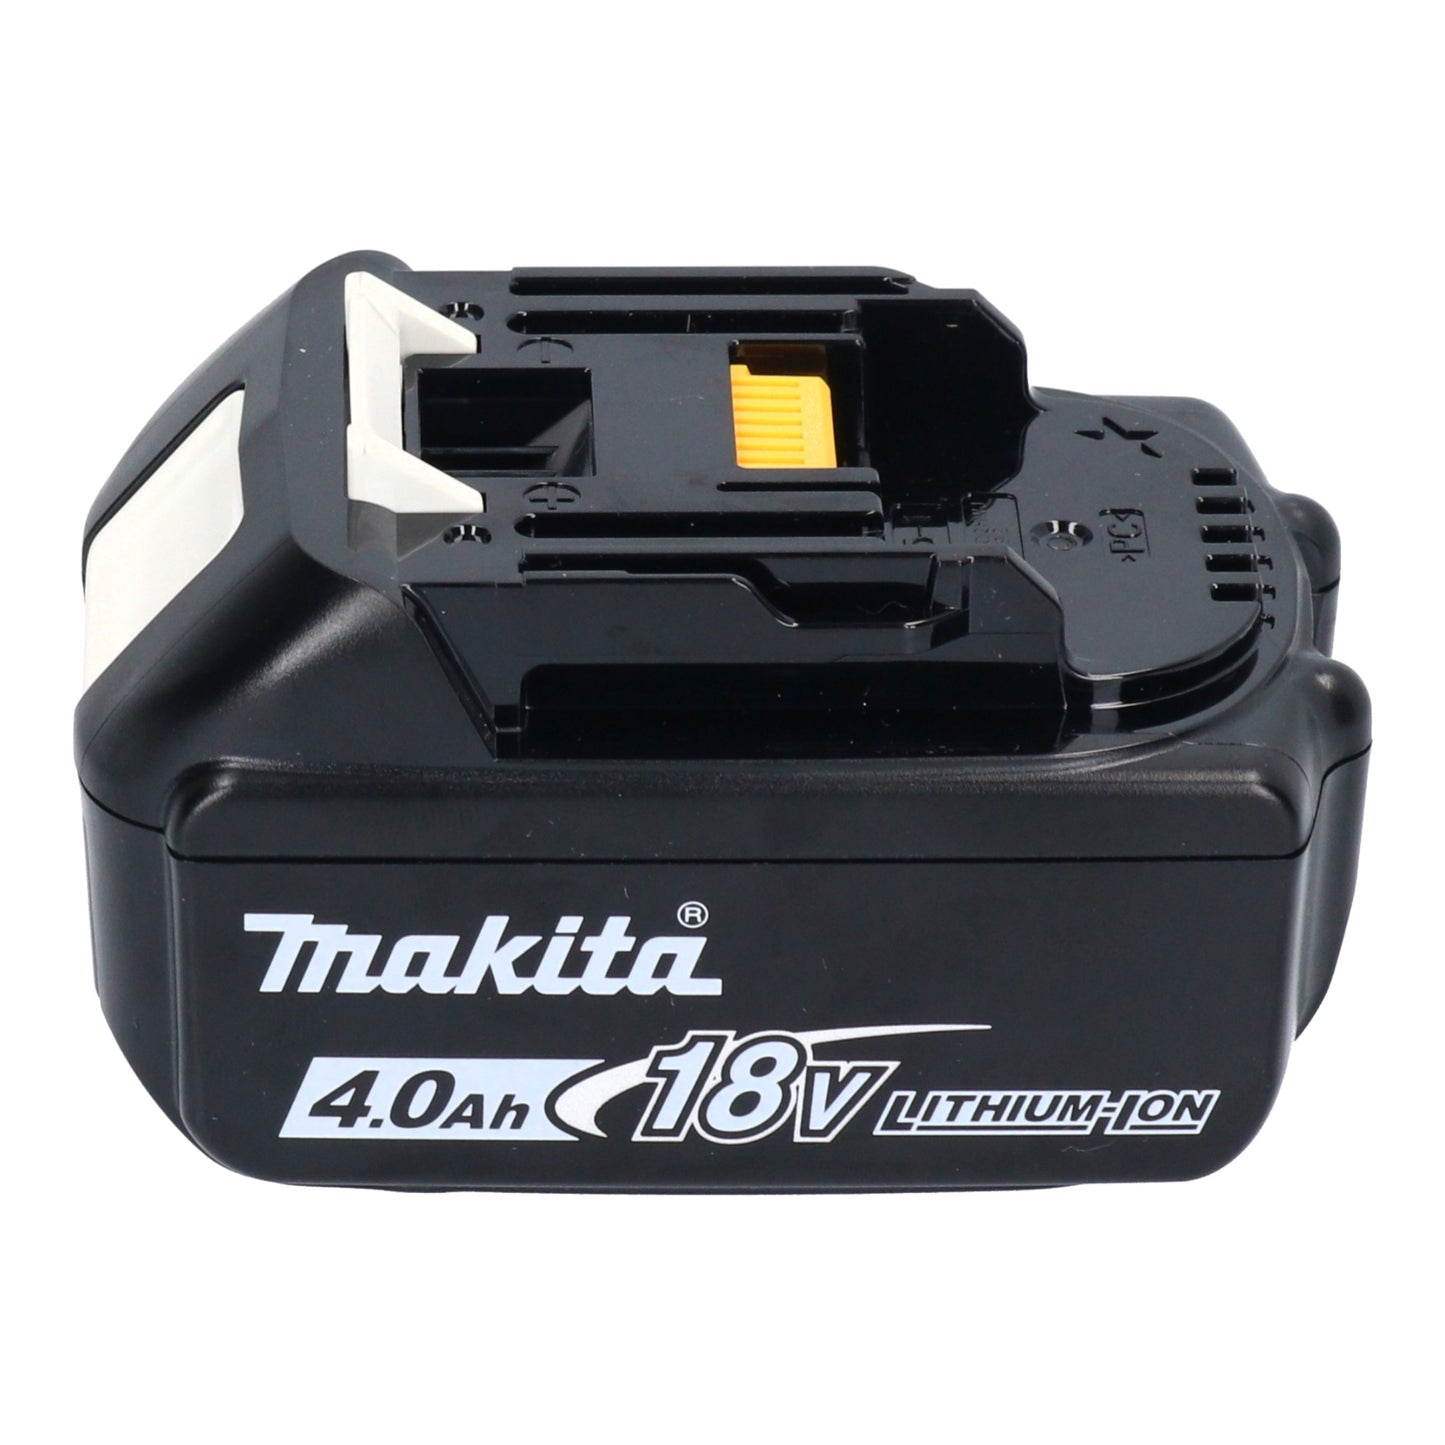 Makita DHP 482 M1JB Akku Schlagbohrschrauber 18 V 62 Nm Schwarz + 1x Akku 4,0 Ah + Makpac - ohne Ladegerät